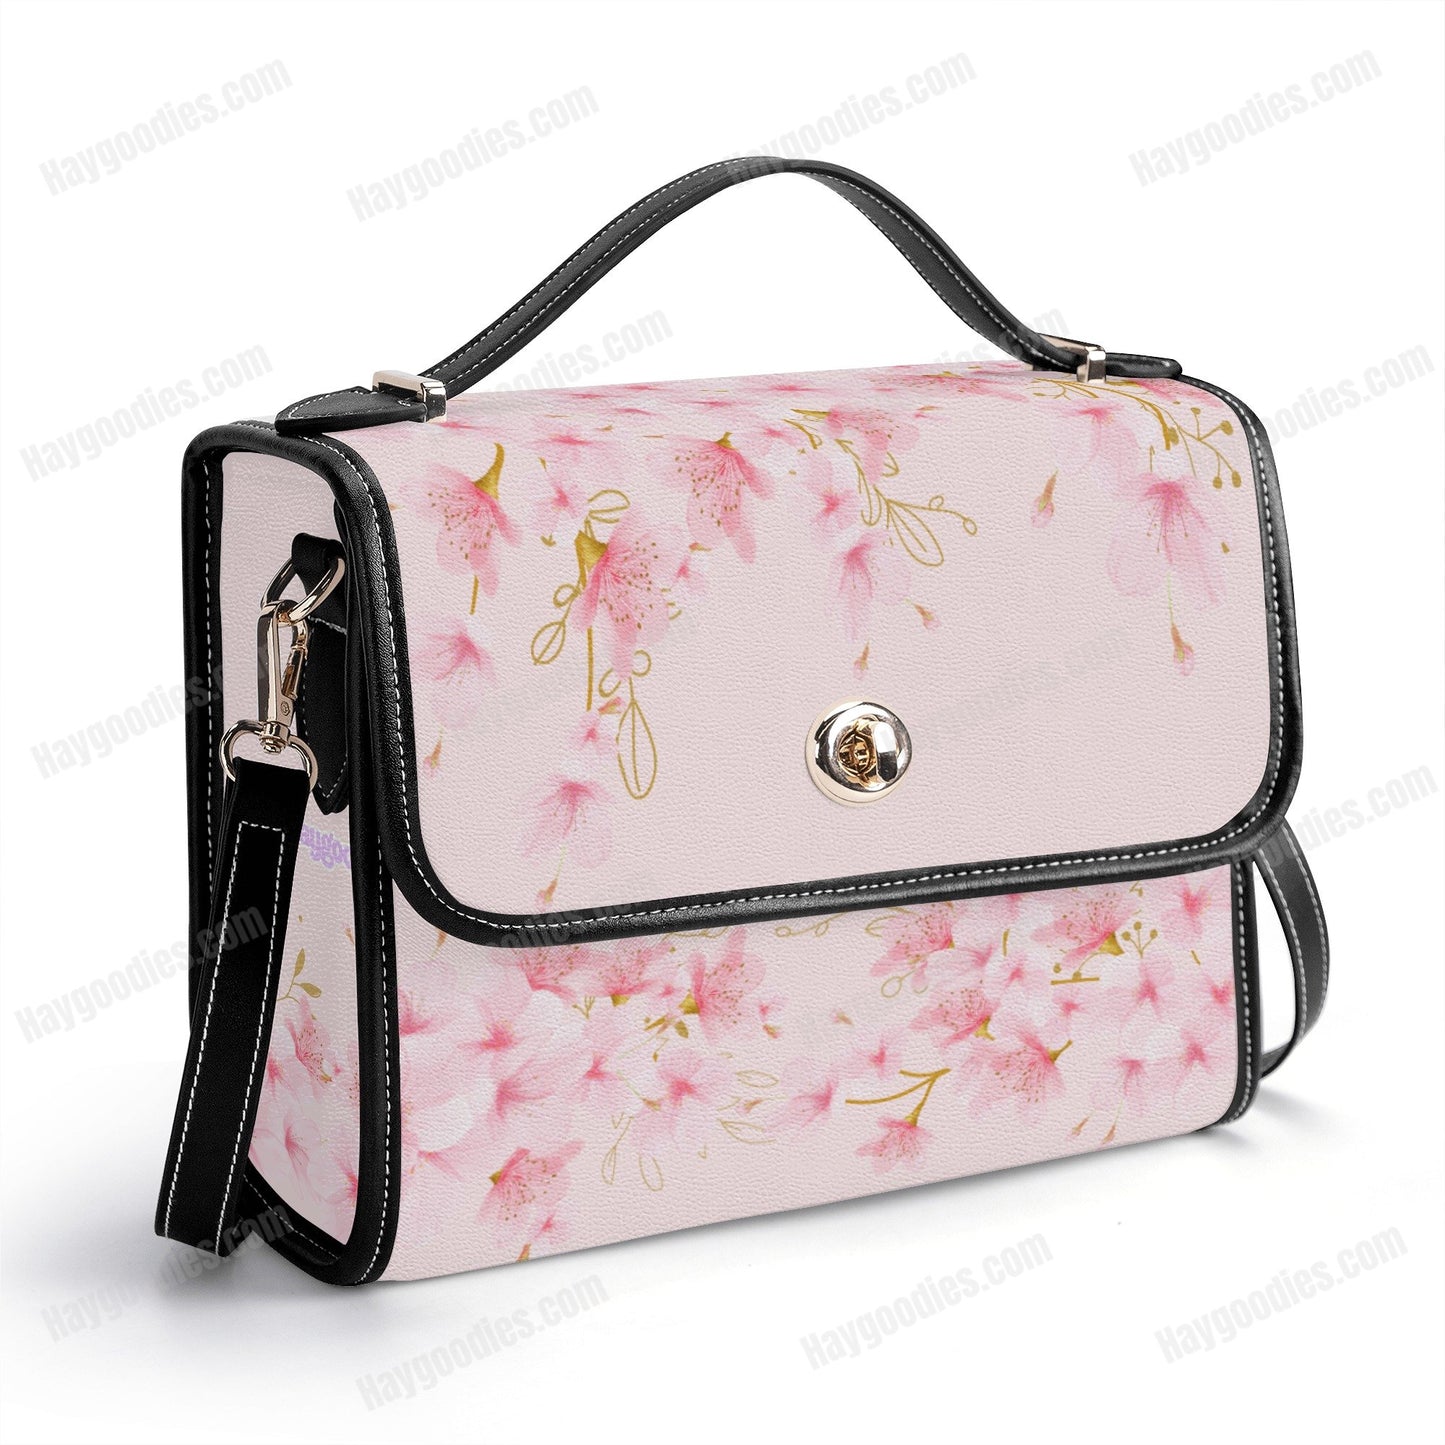 Pink Sakura Cherry Blossom PU Leather Satchel Bag